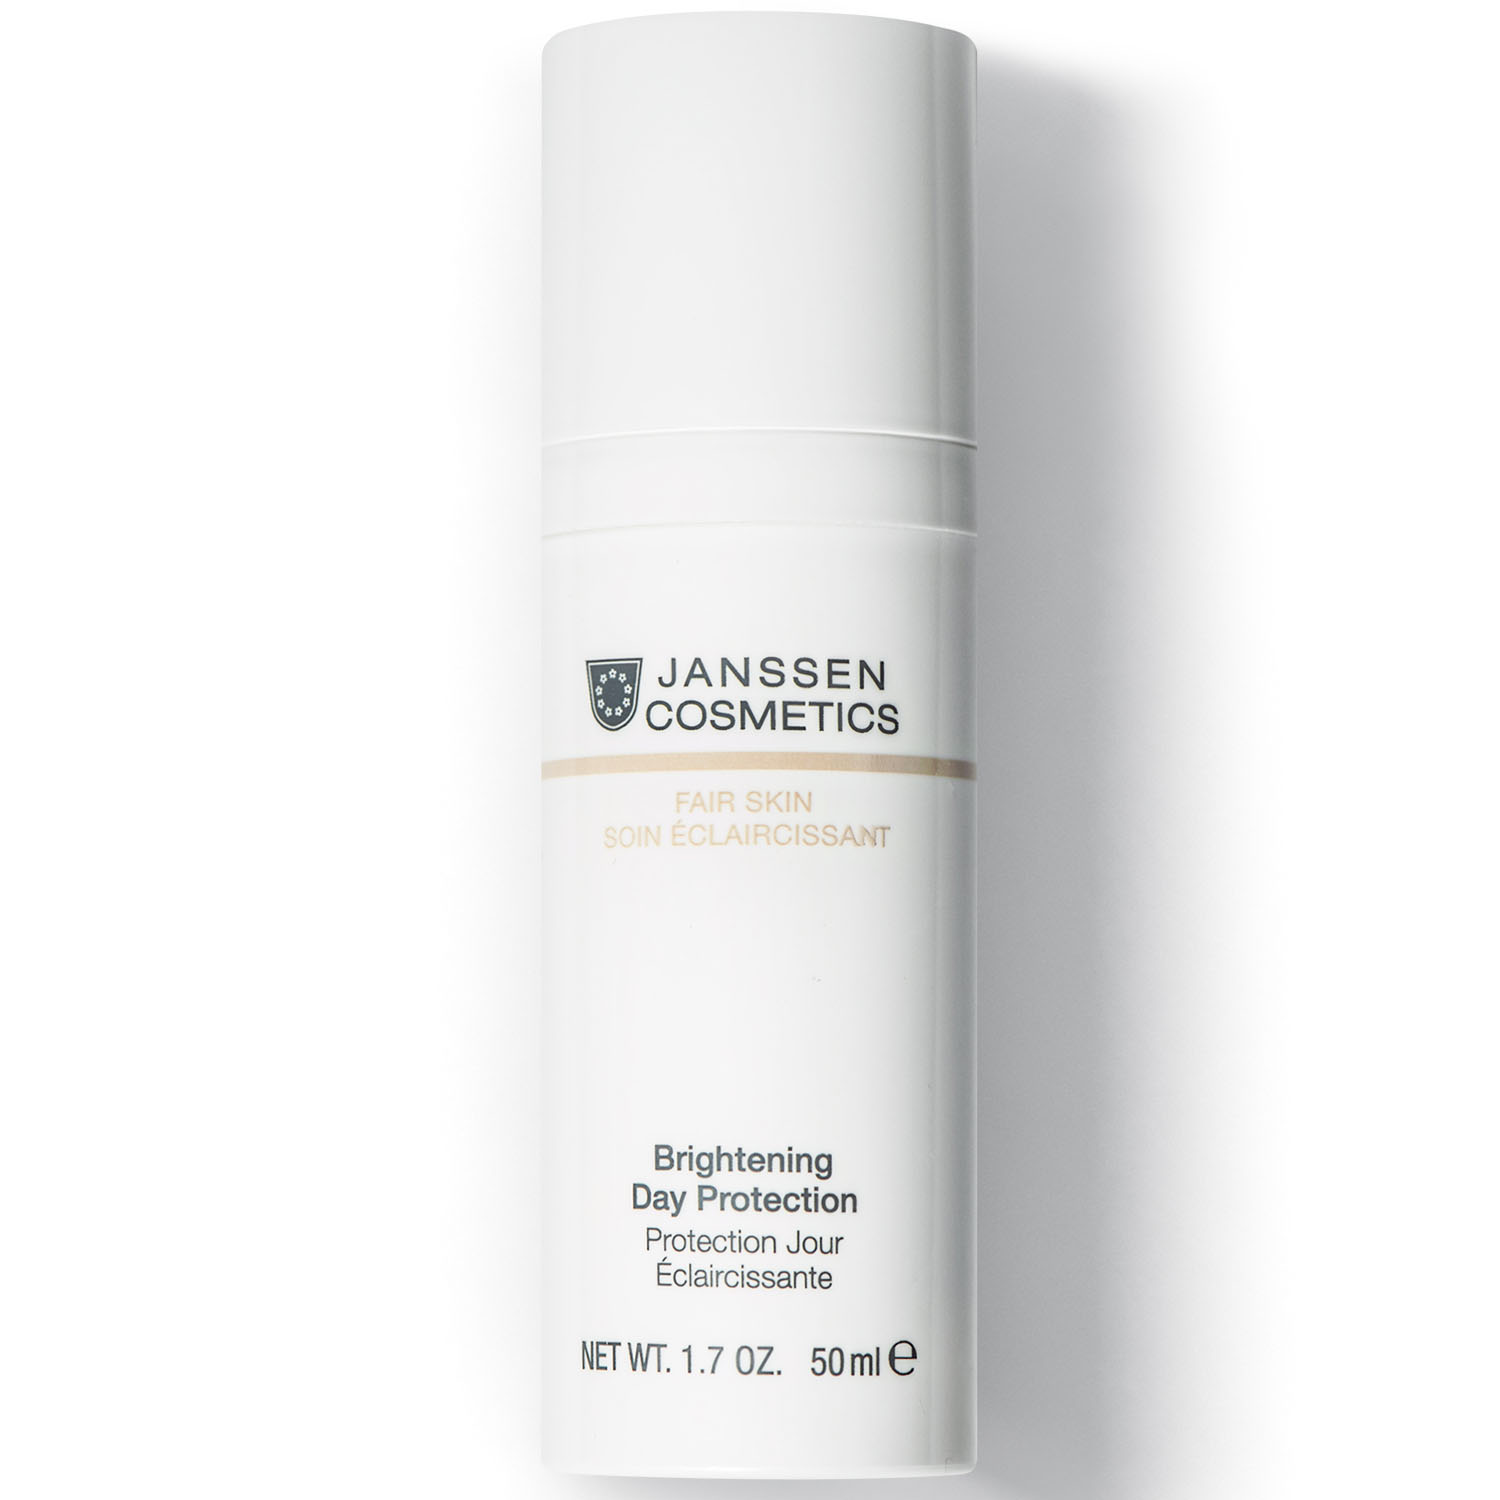 Janssen Cosmetics Осветляющий дневной крем SPF 20 Brightening Day Protection, 50 мл (Janssen Cosmetics, Fair Skin)